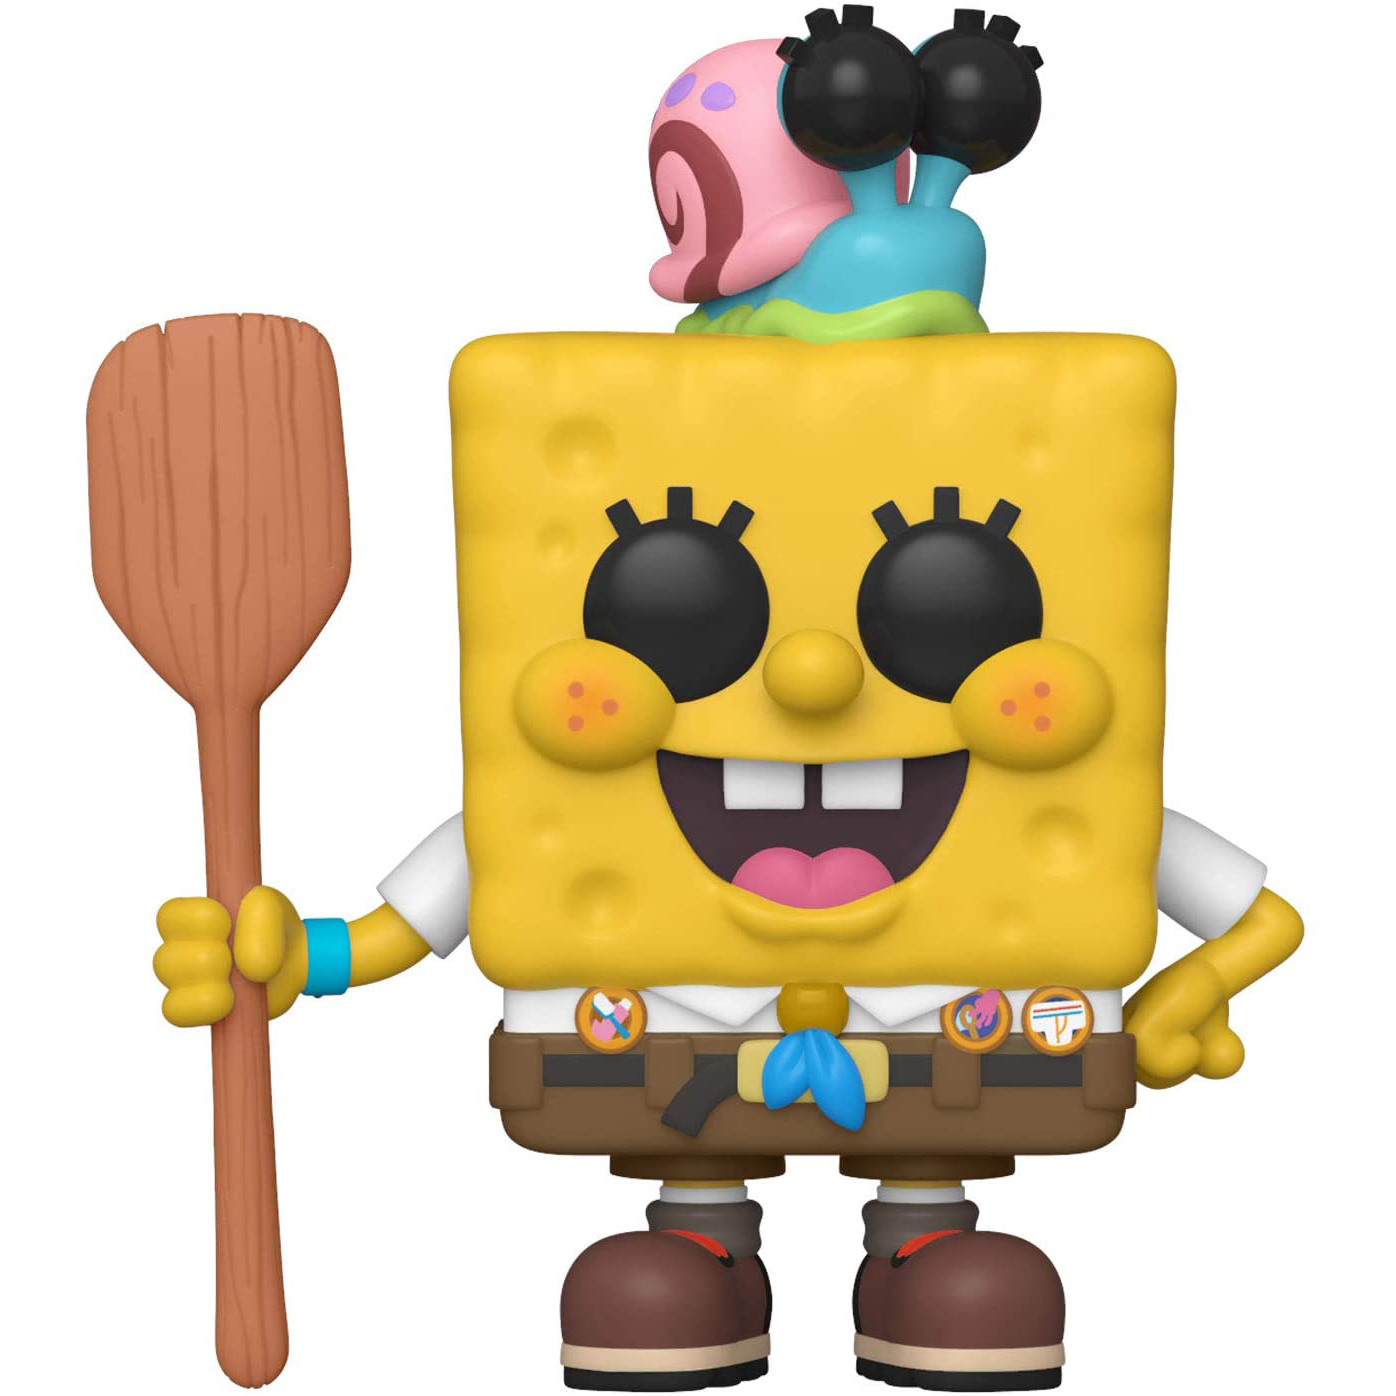 Spongebob in Camping Gear